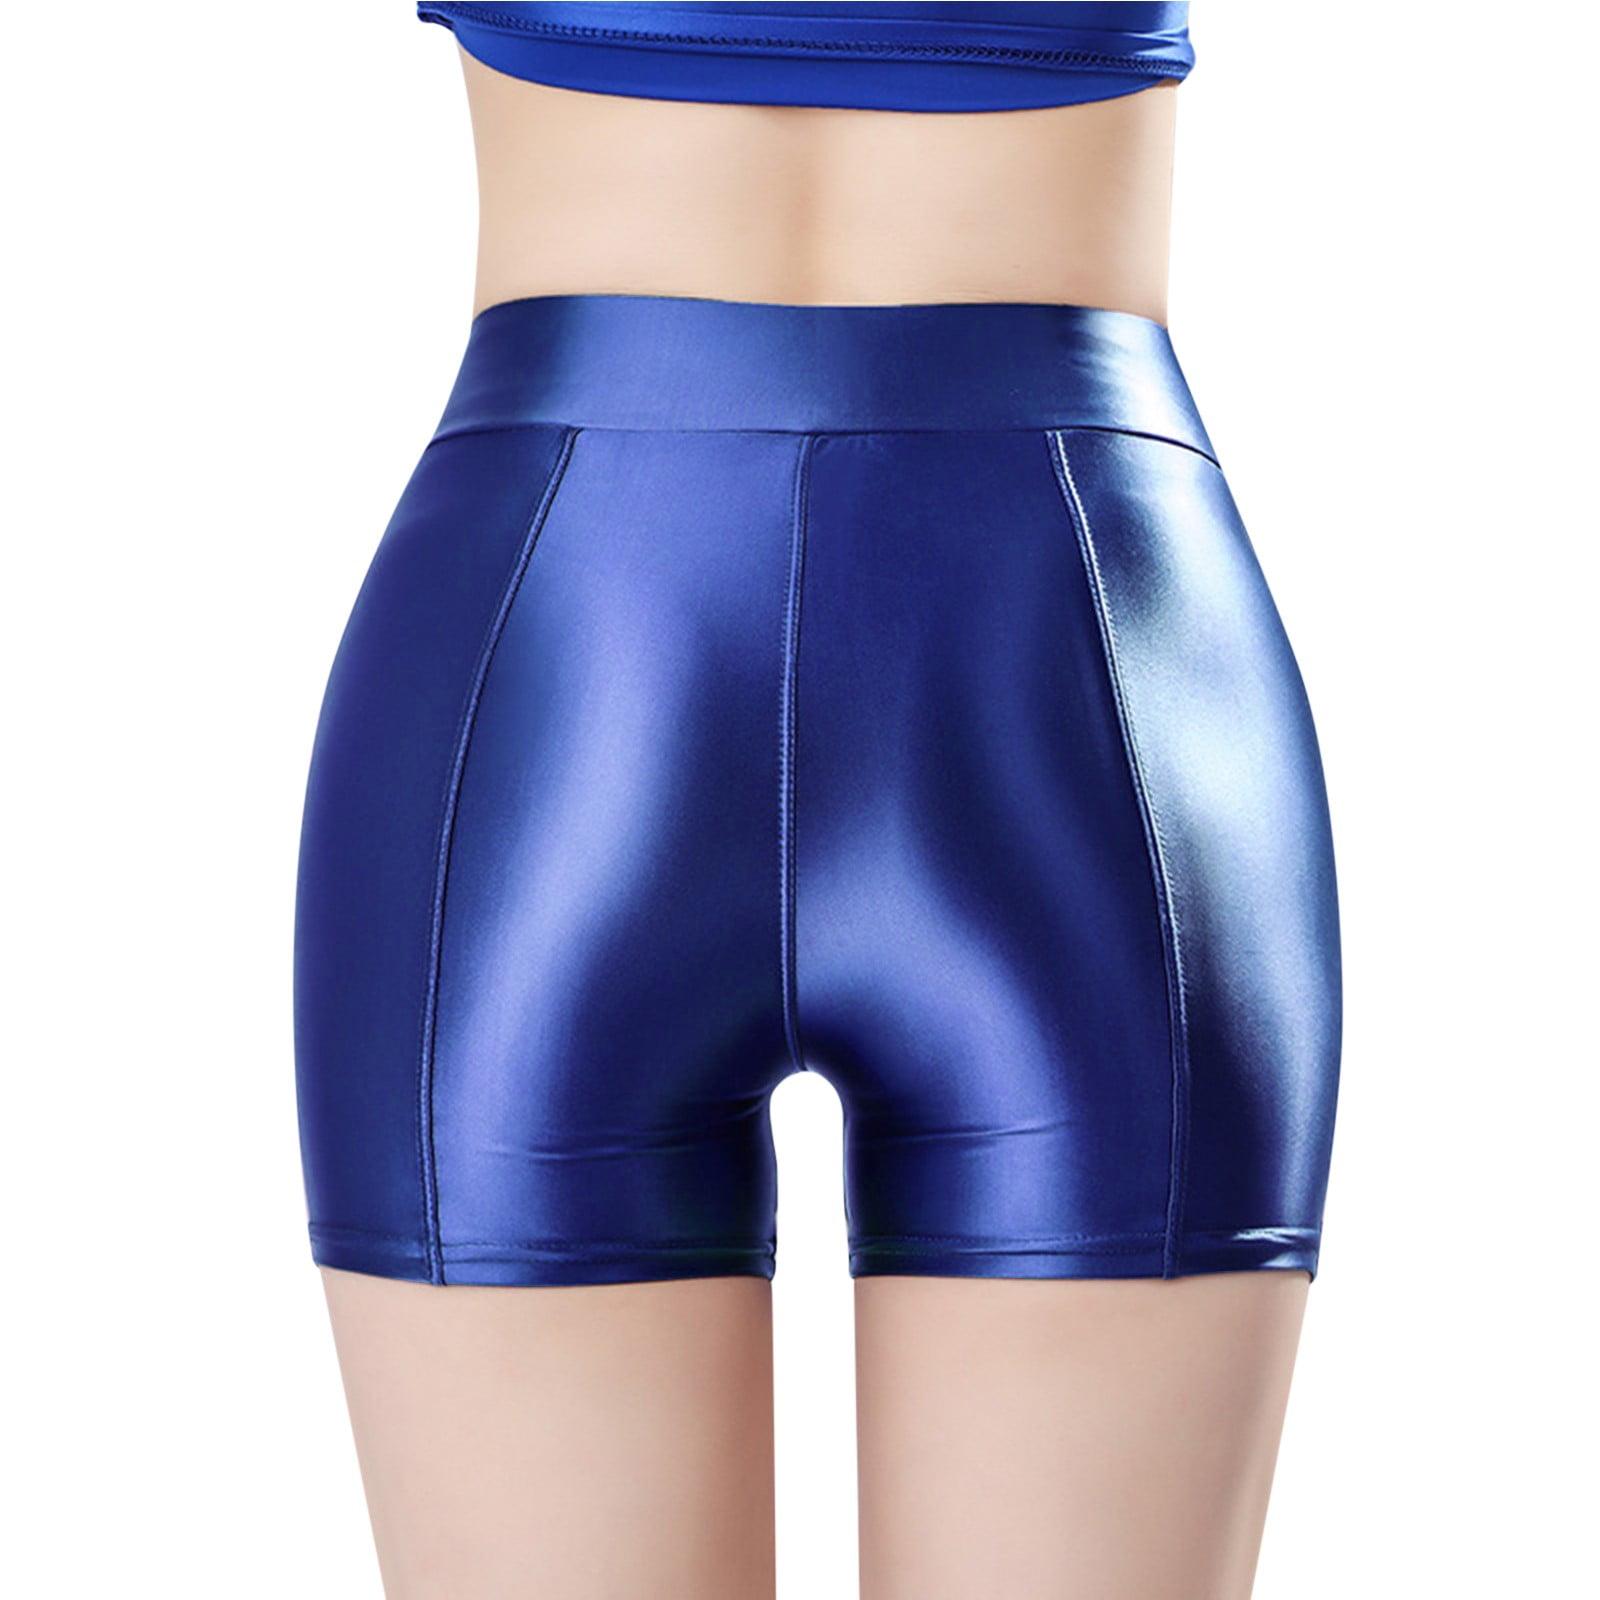 Buy Pepperika Printed Women Cotton Hot Short/Night Shorts/Beach Shorts/Sports  Shorts/Hot Pants (Pack of 2) at Amazon.in